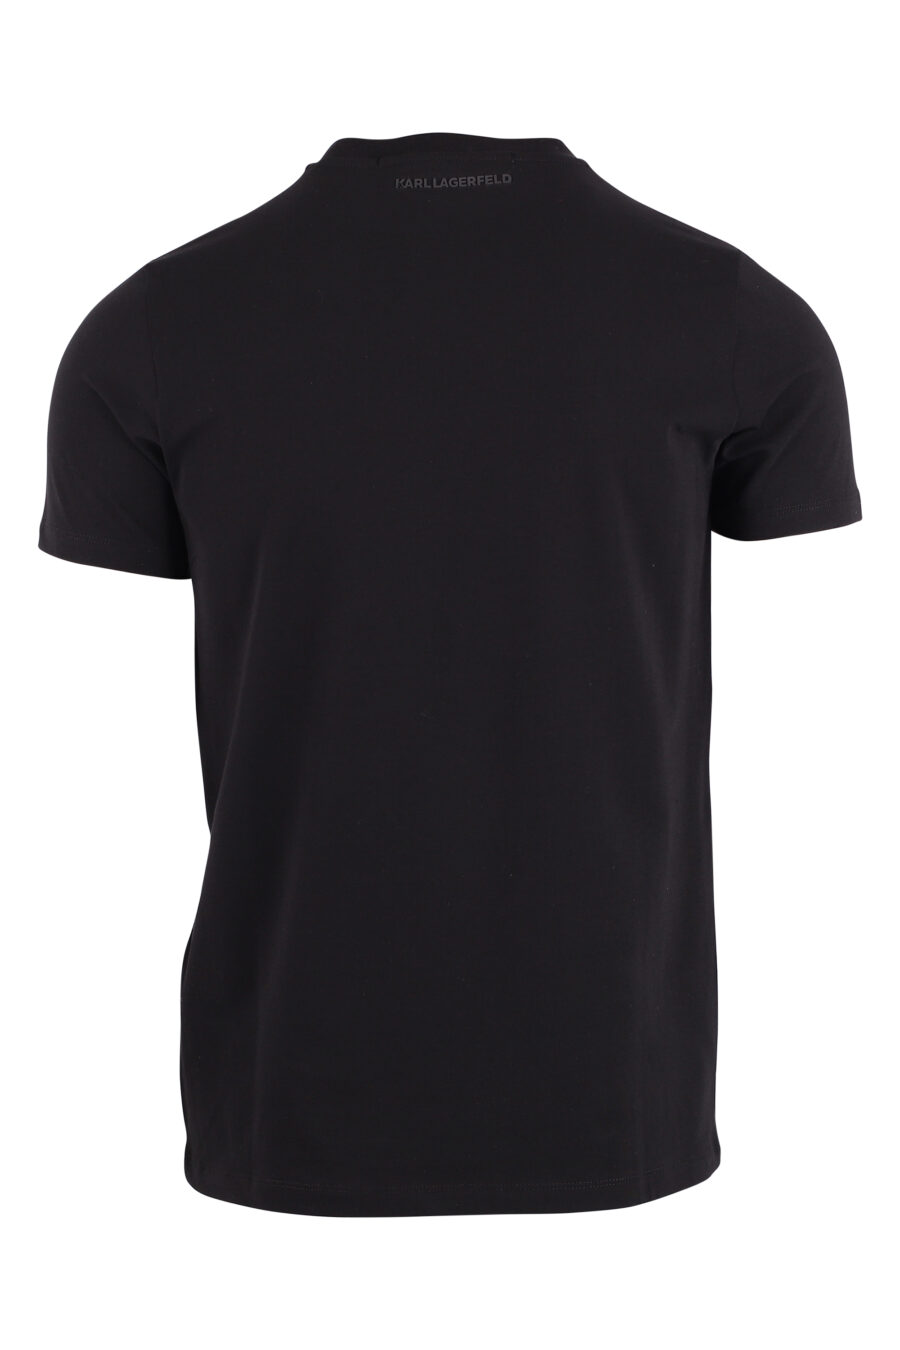 Schwarzes T-Shirt mit Hologramm-Effekt-Logo - IMG 9411